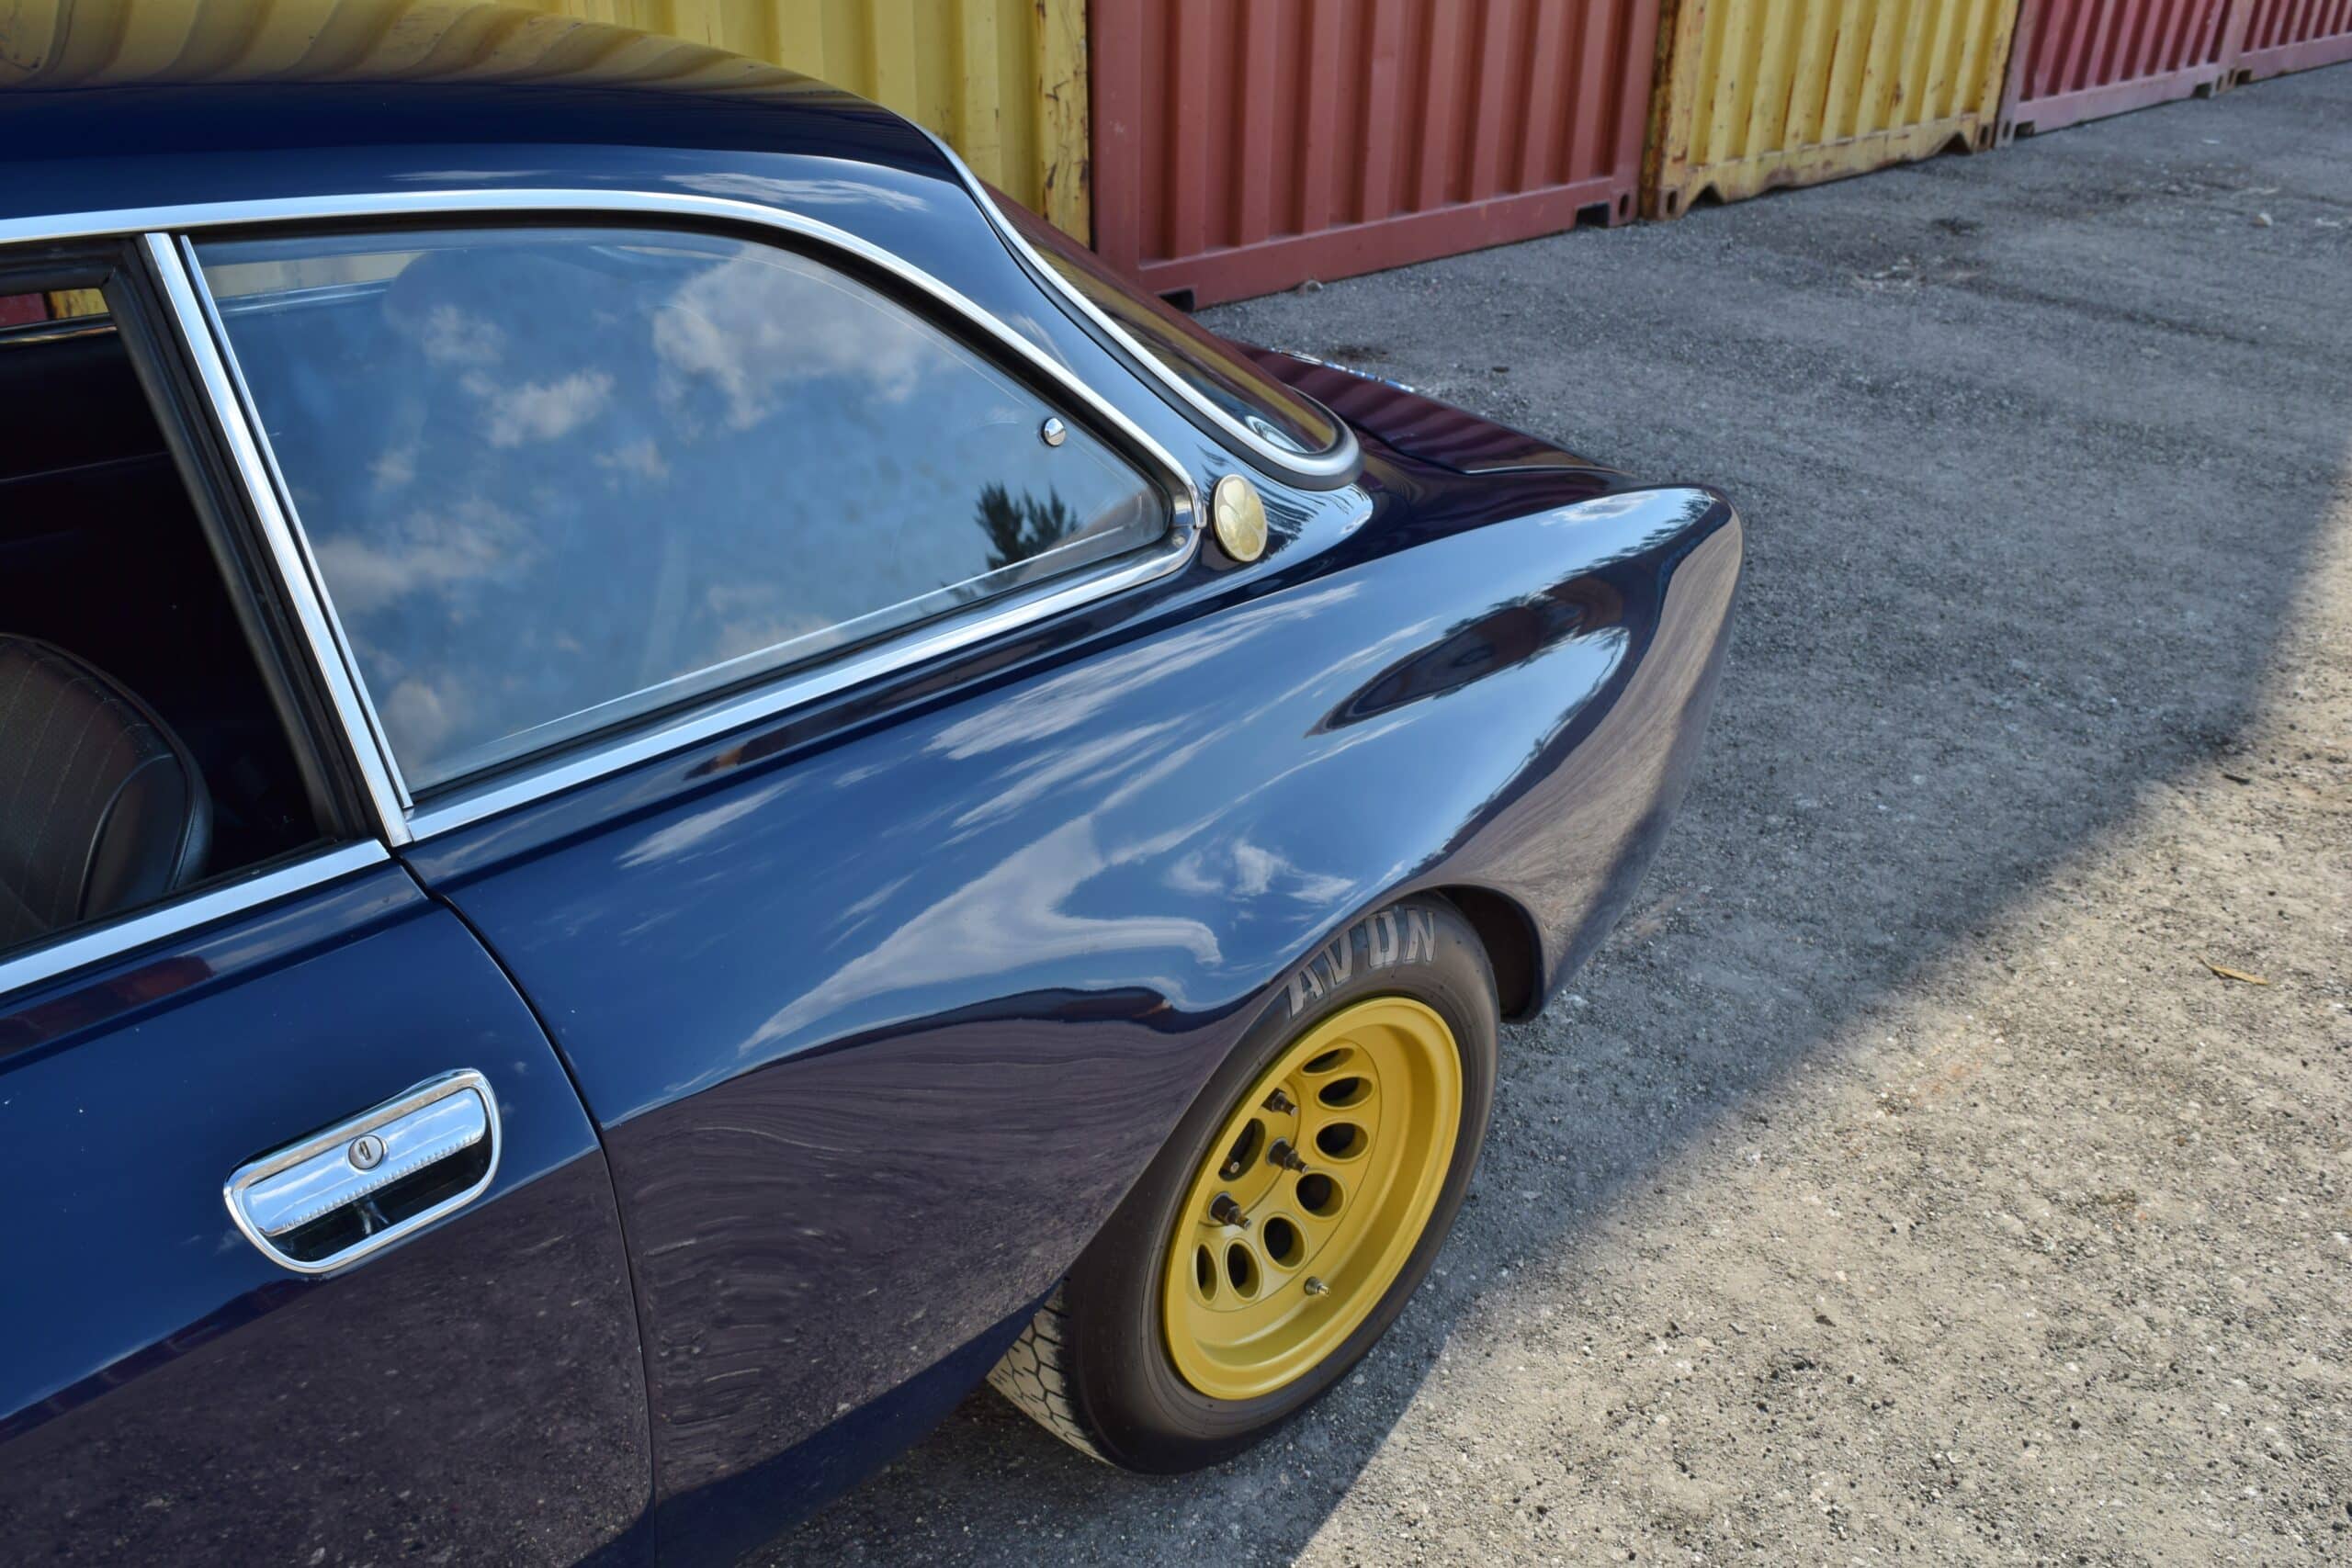 1971 Alfa Romeo GTV GTAM Tribute Alfaholics Built 2.0L Twin Plug Quaife Sequential trans- GTAM Brakes/ Suspension